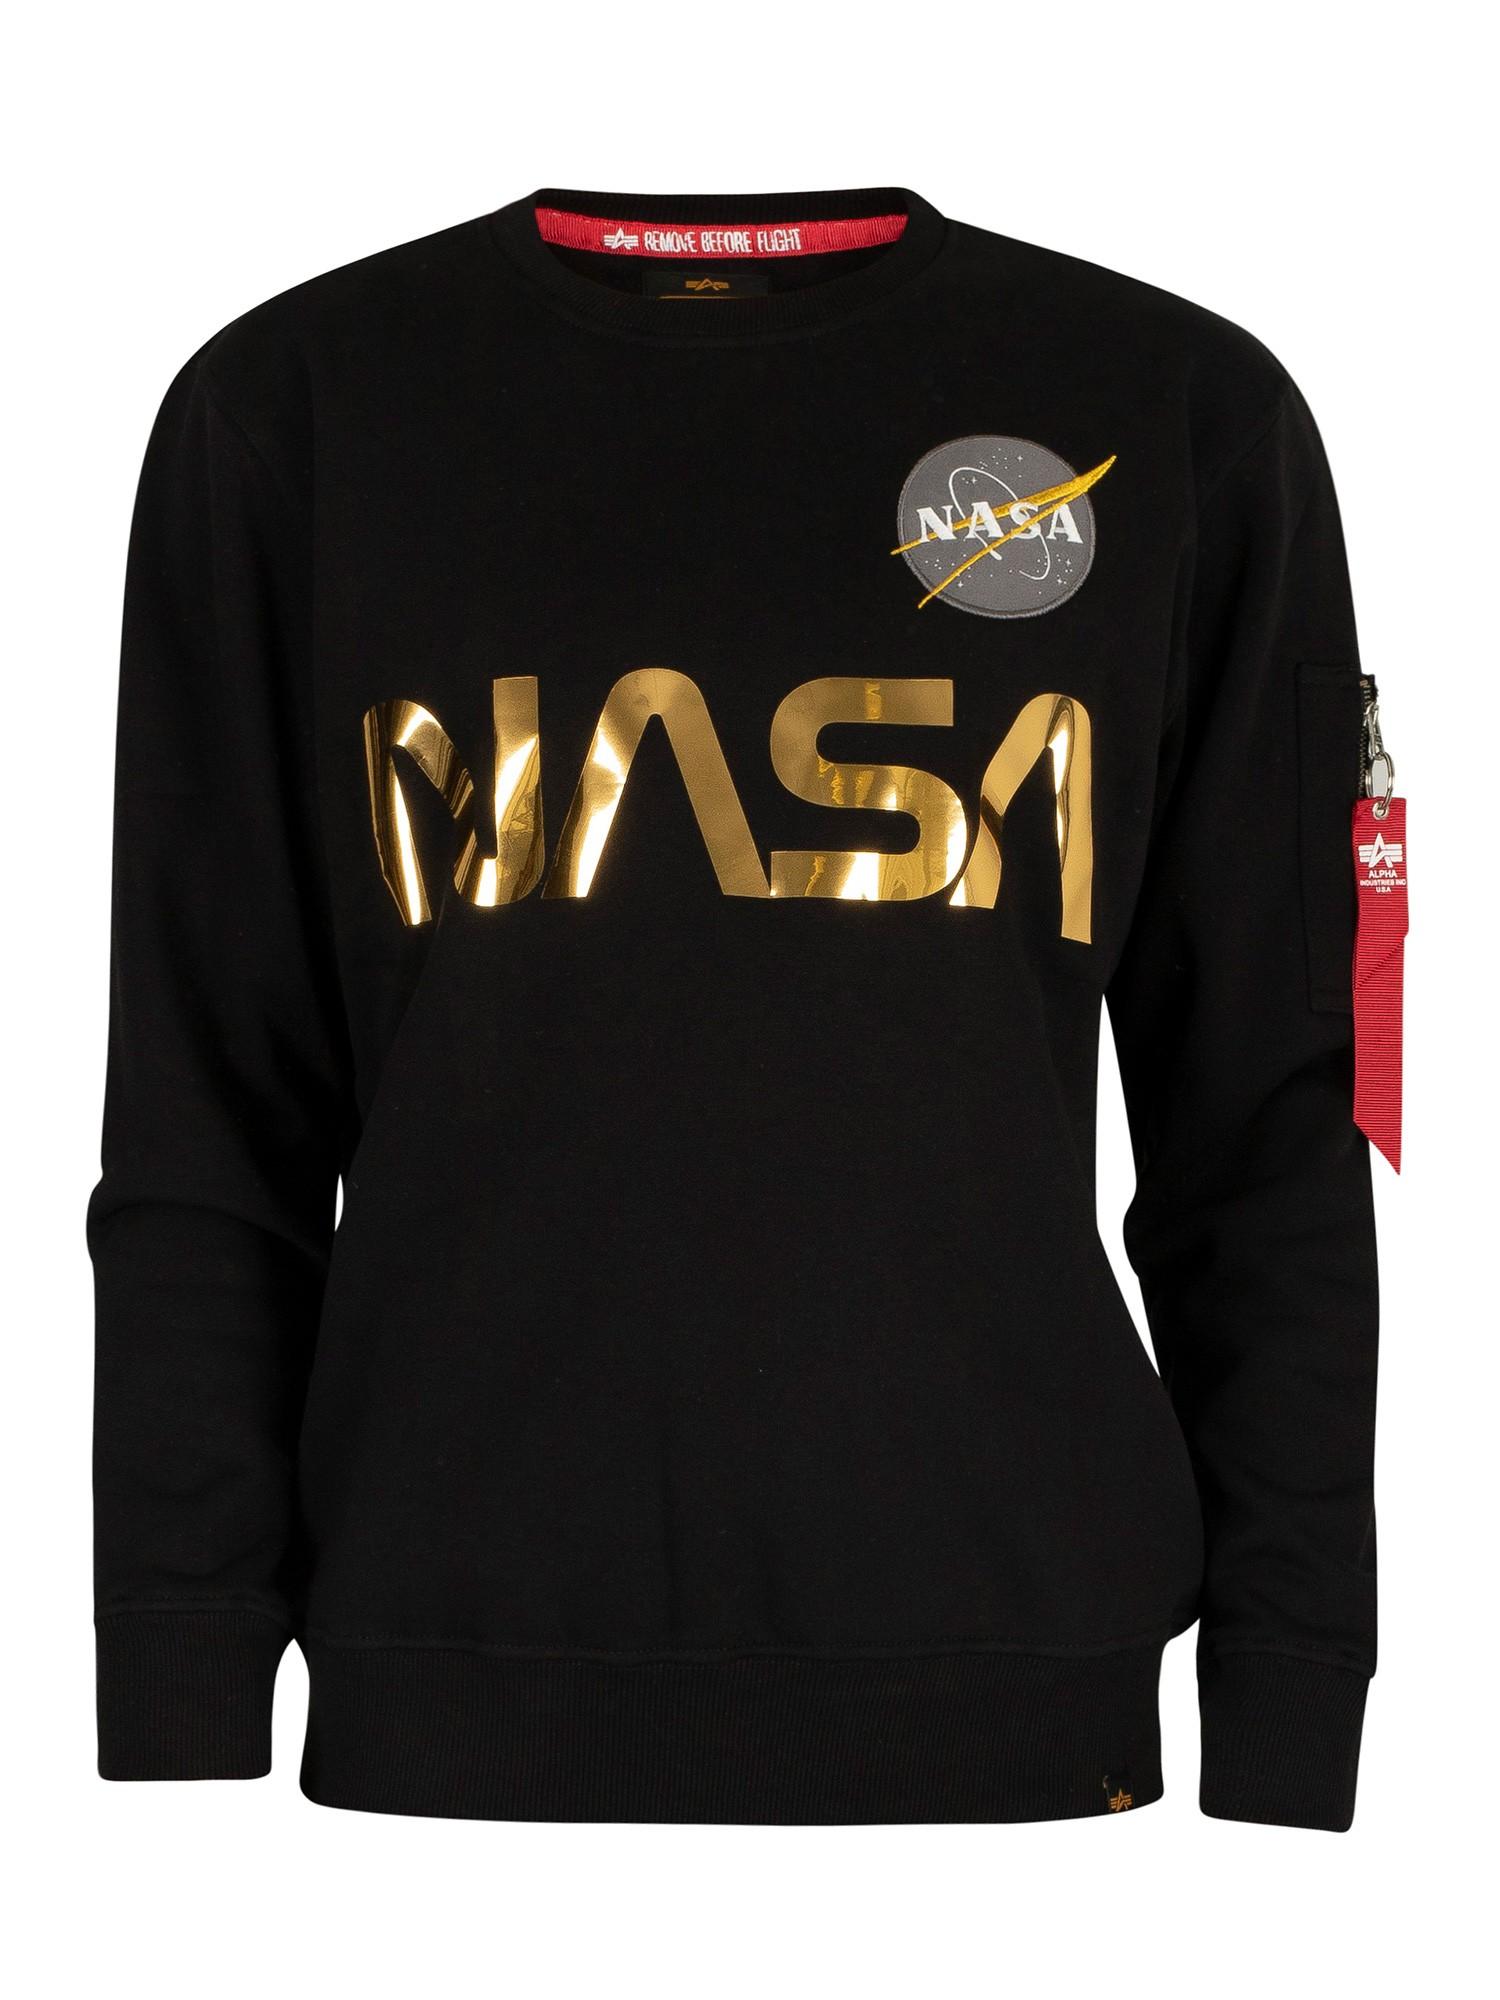 Details about   Alpha Industries NASA Reflective Sweatshirt Black/Chrome 